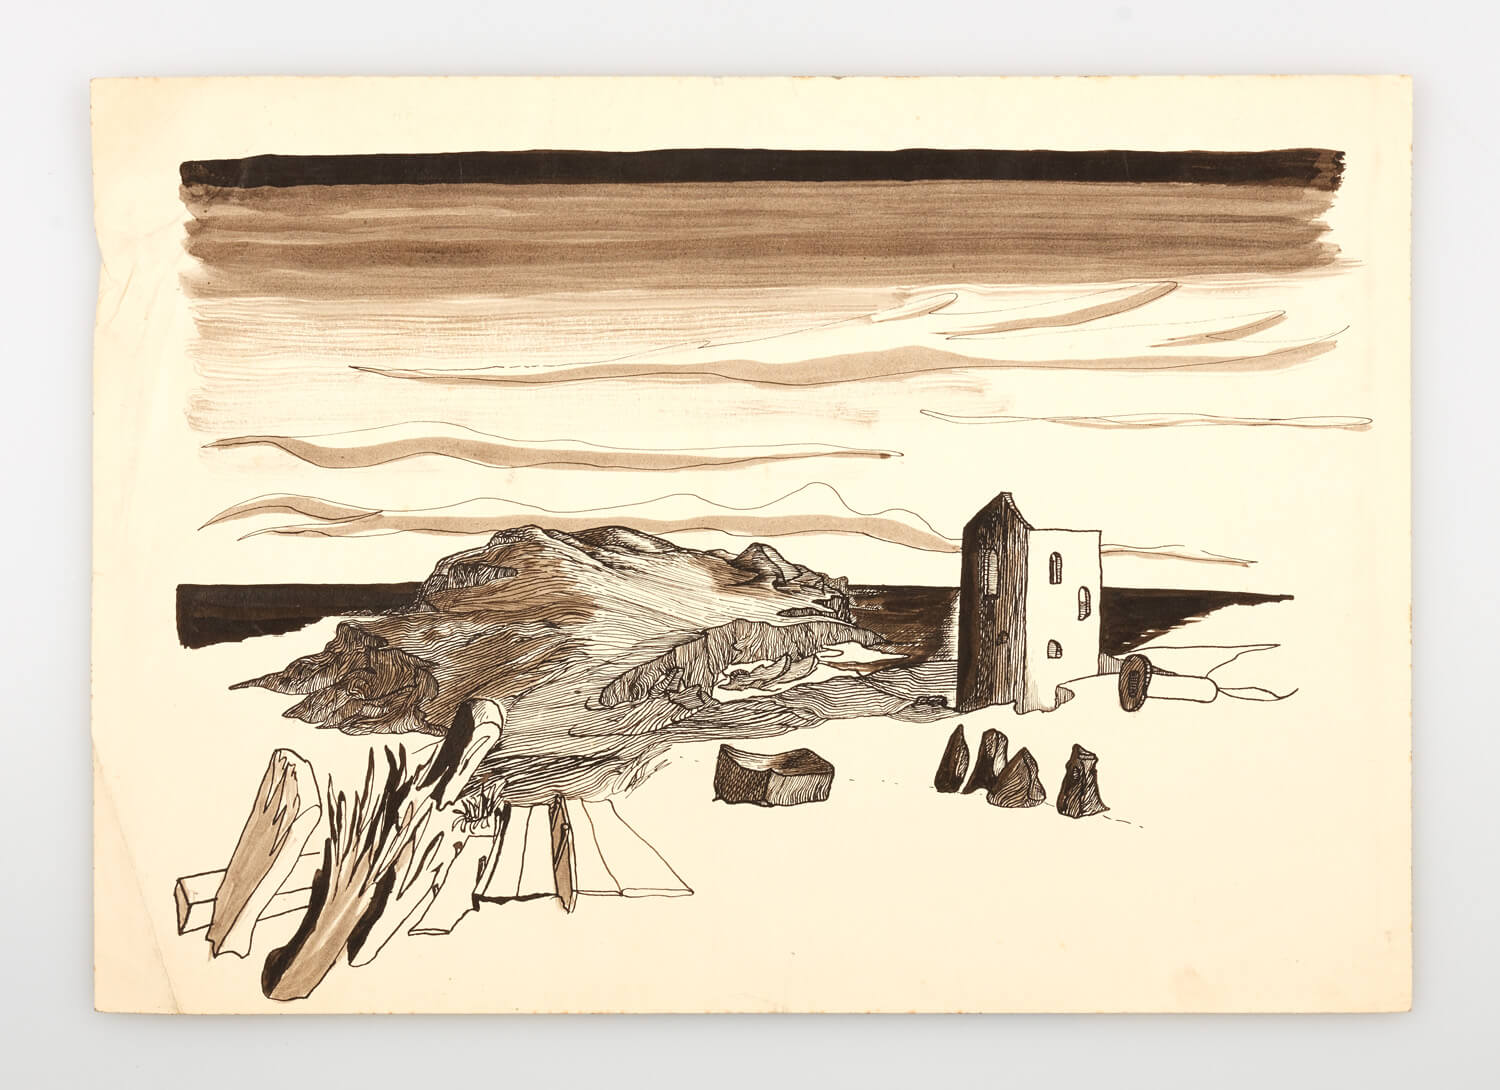 JB252 - Cornish Landscape - 1946 - 25 x 35.5 cm - Pen and ink